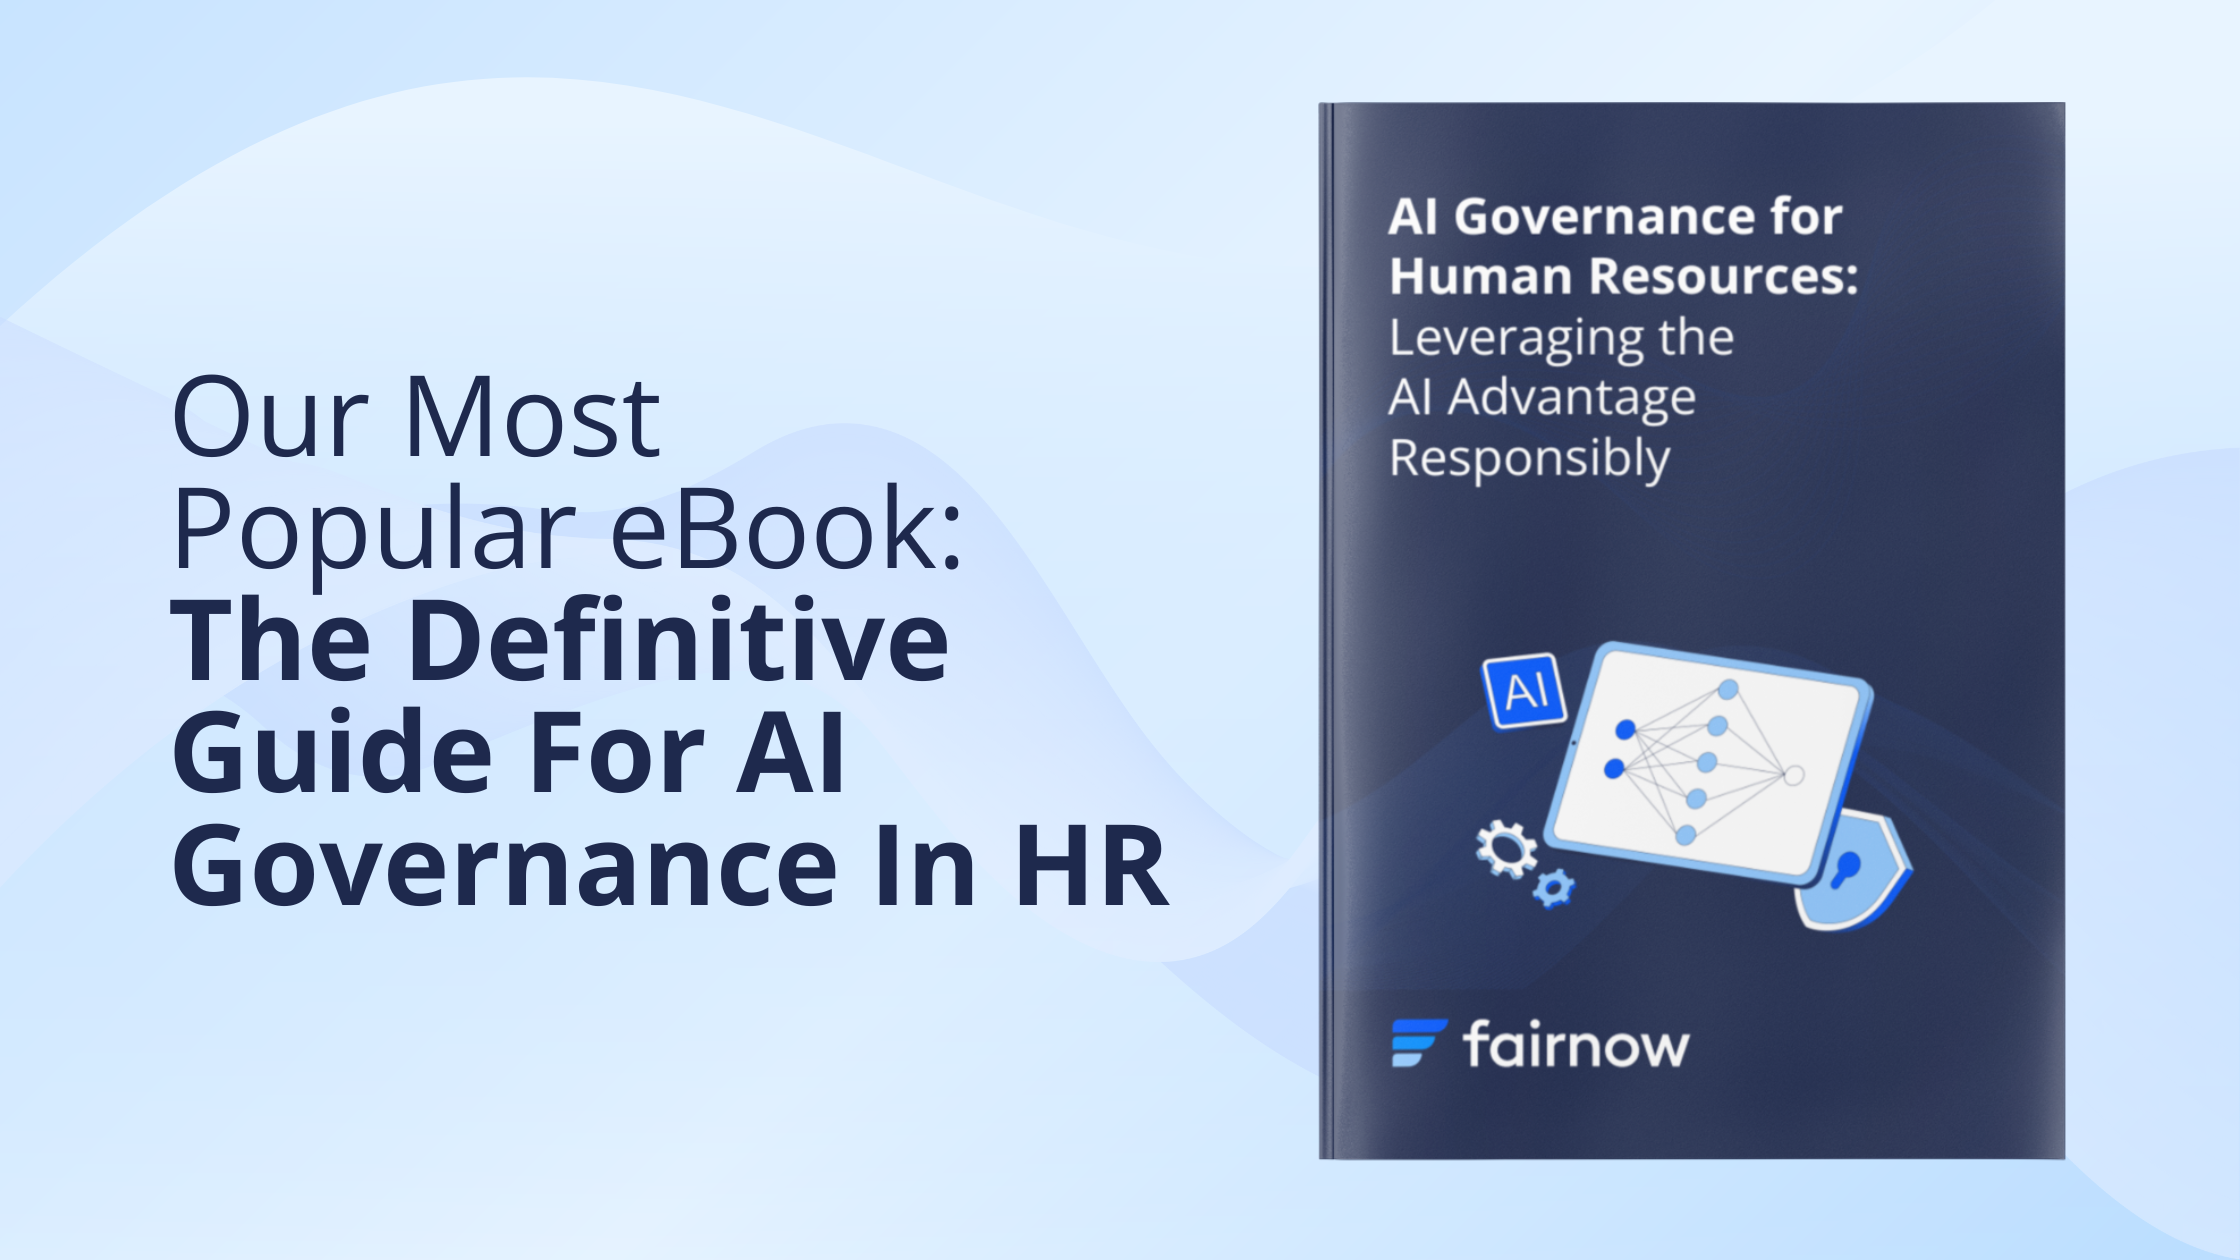 AI Governance for Human Resources